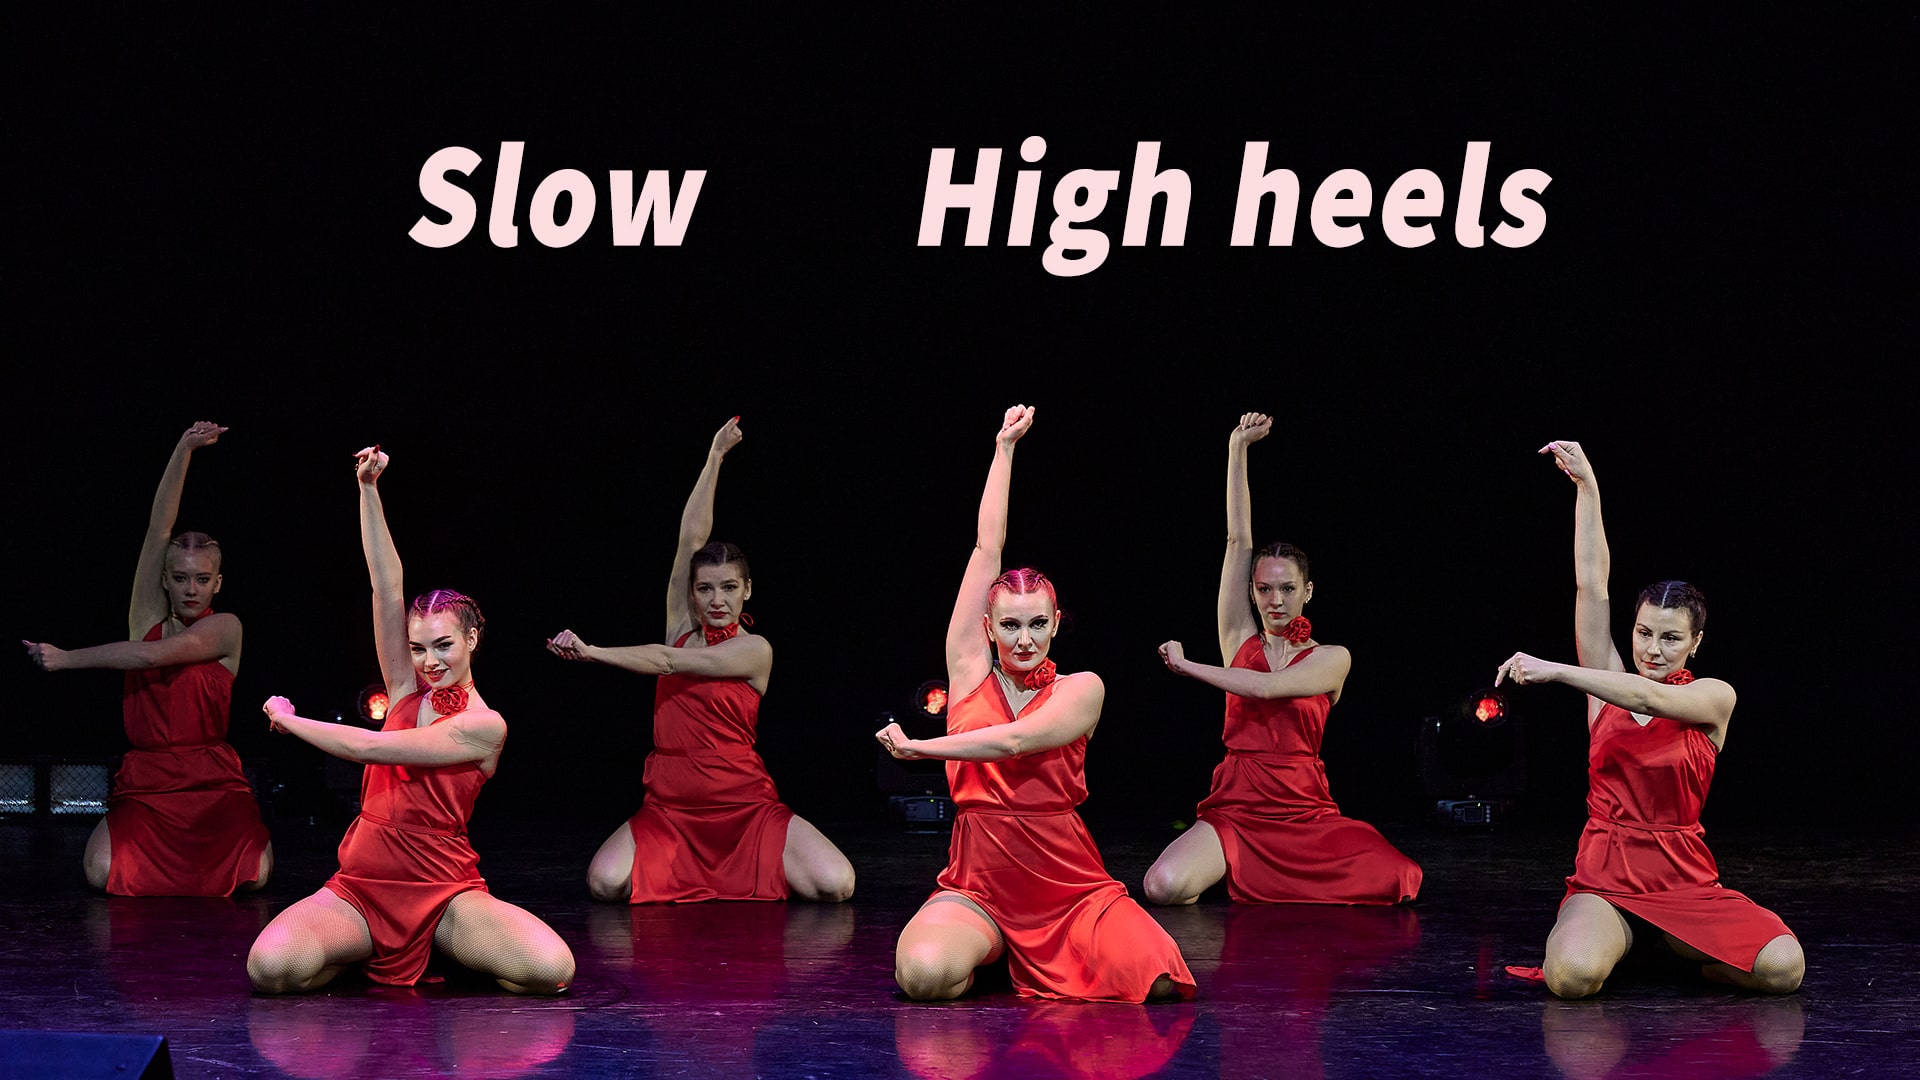 Slow High heels студия танца Divadance